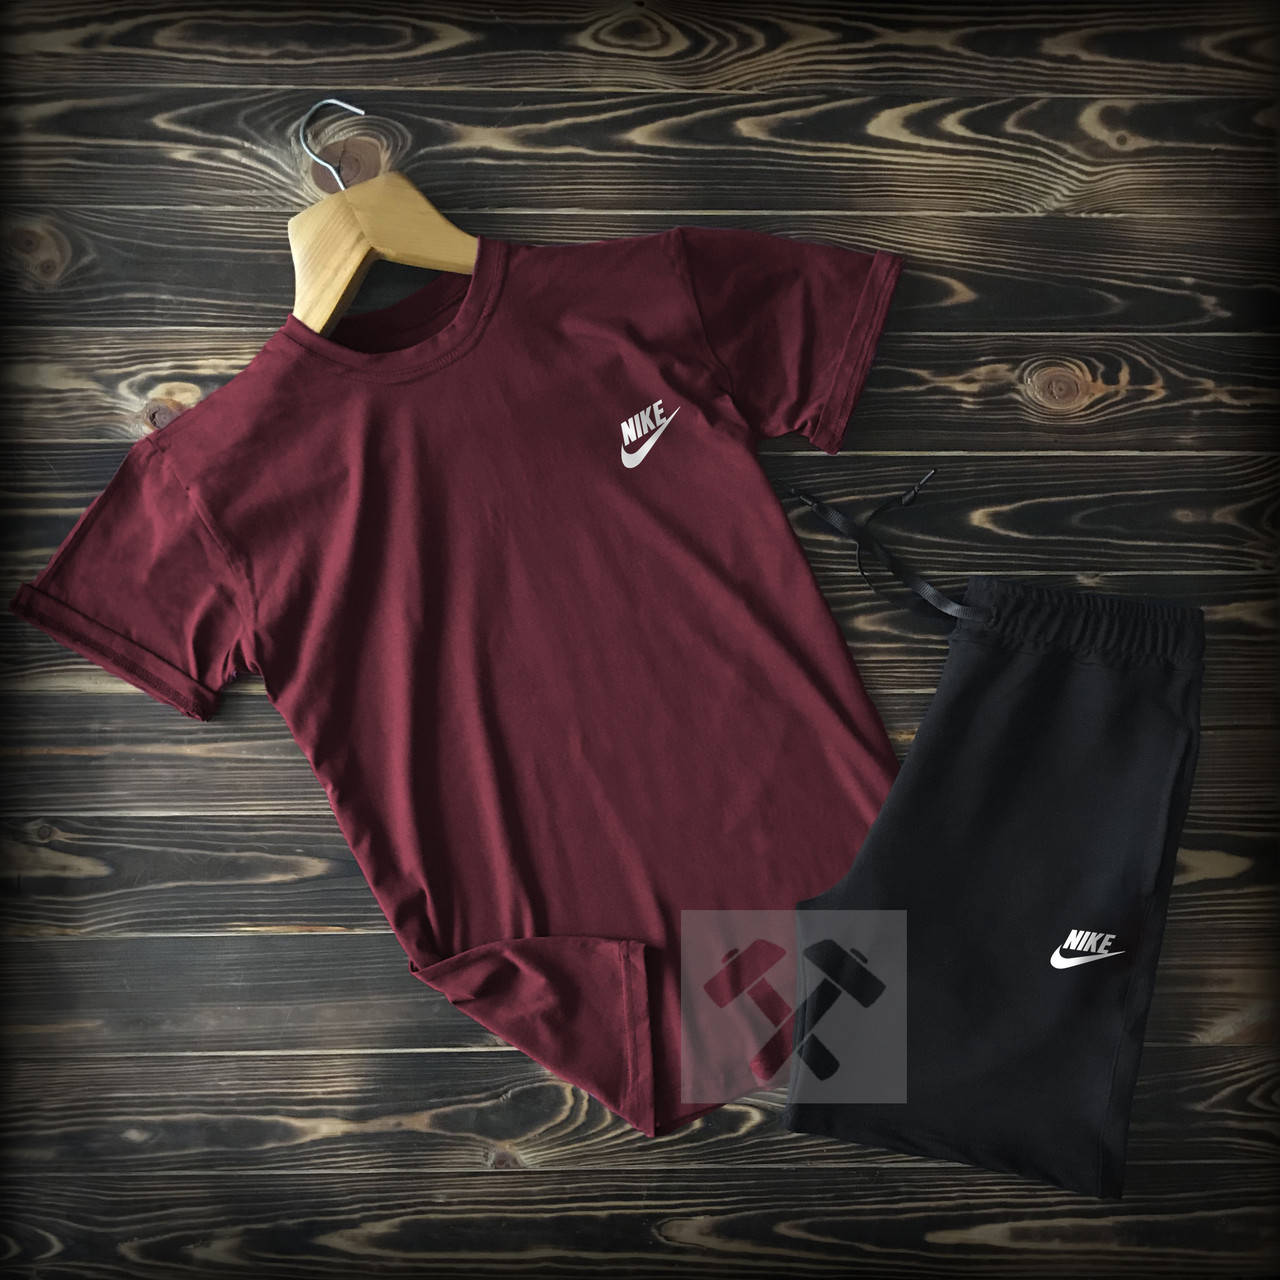 

Мужской костюм футболка и шорты Найк, футболка и шорты Nike,брендовый,трикотаж XL